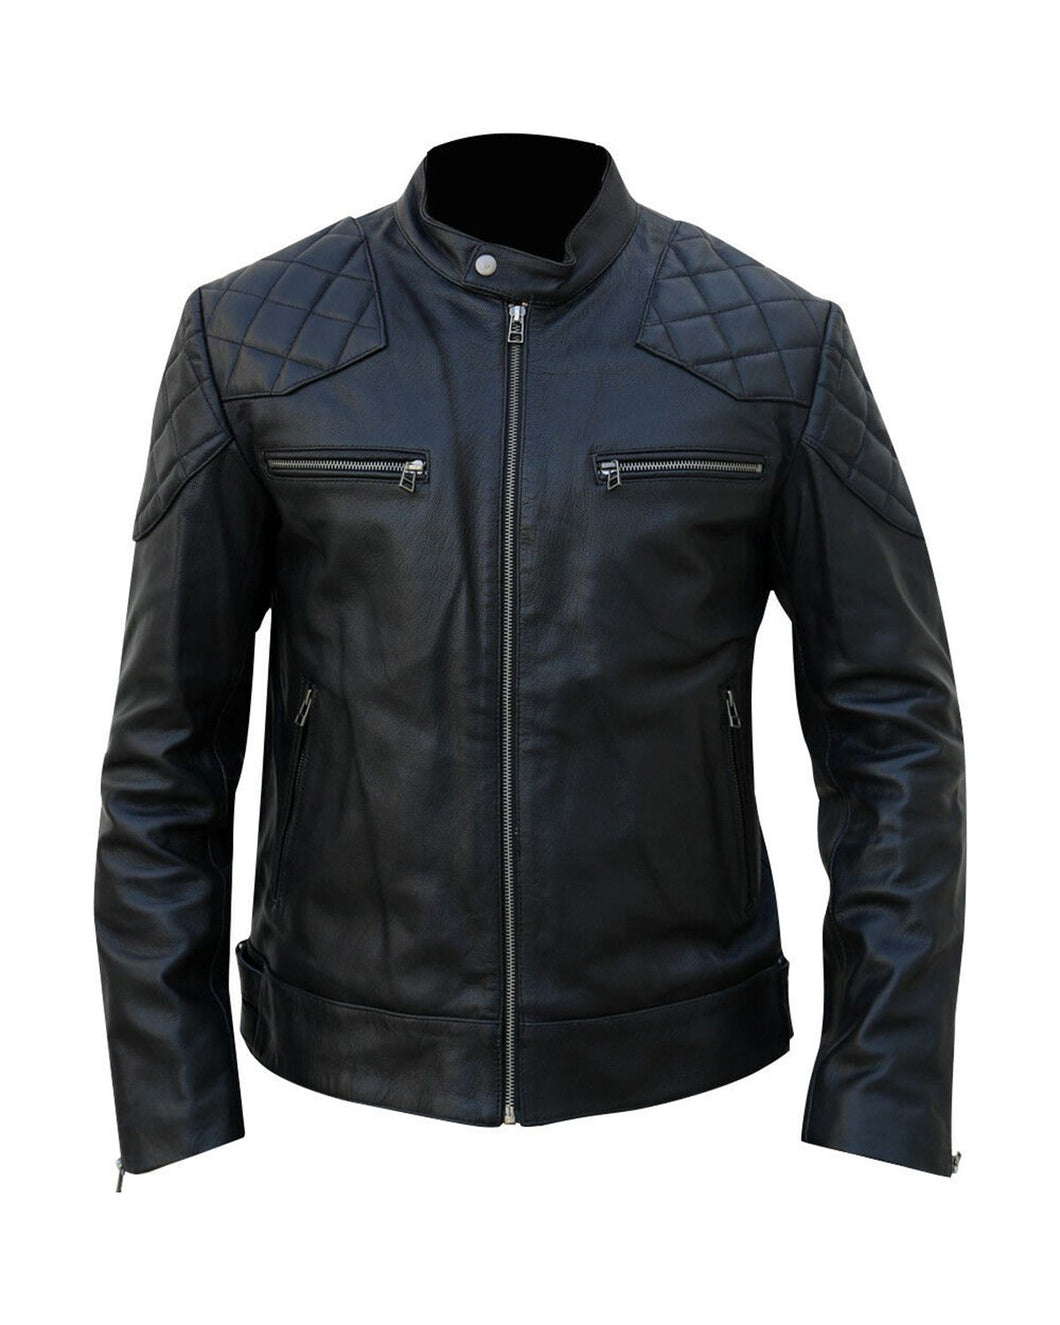 Men's Stylish Black Leather Biker Jacket